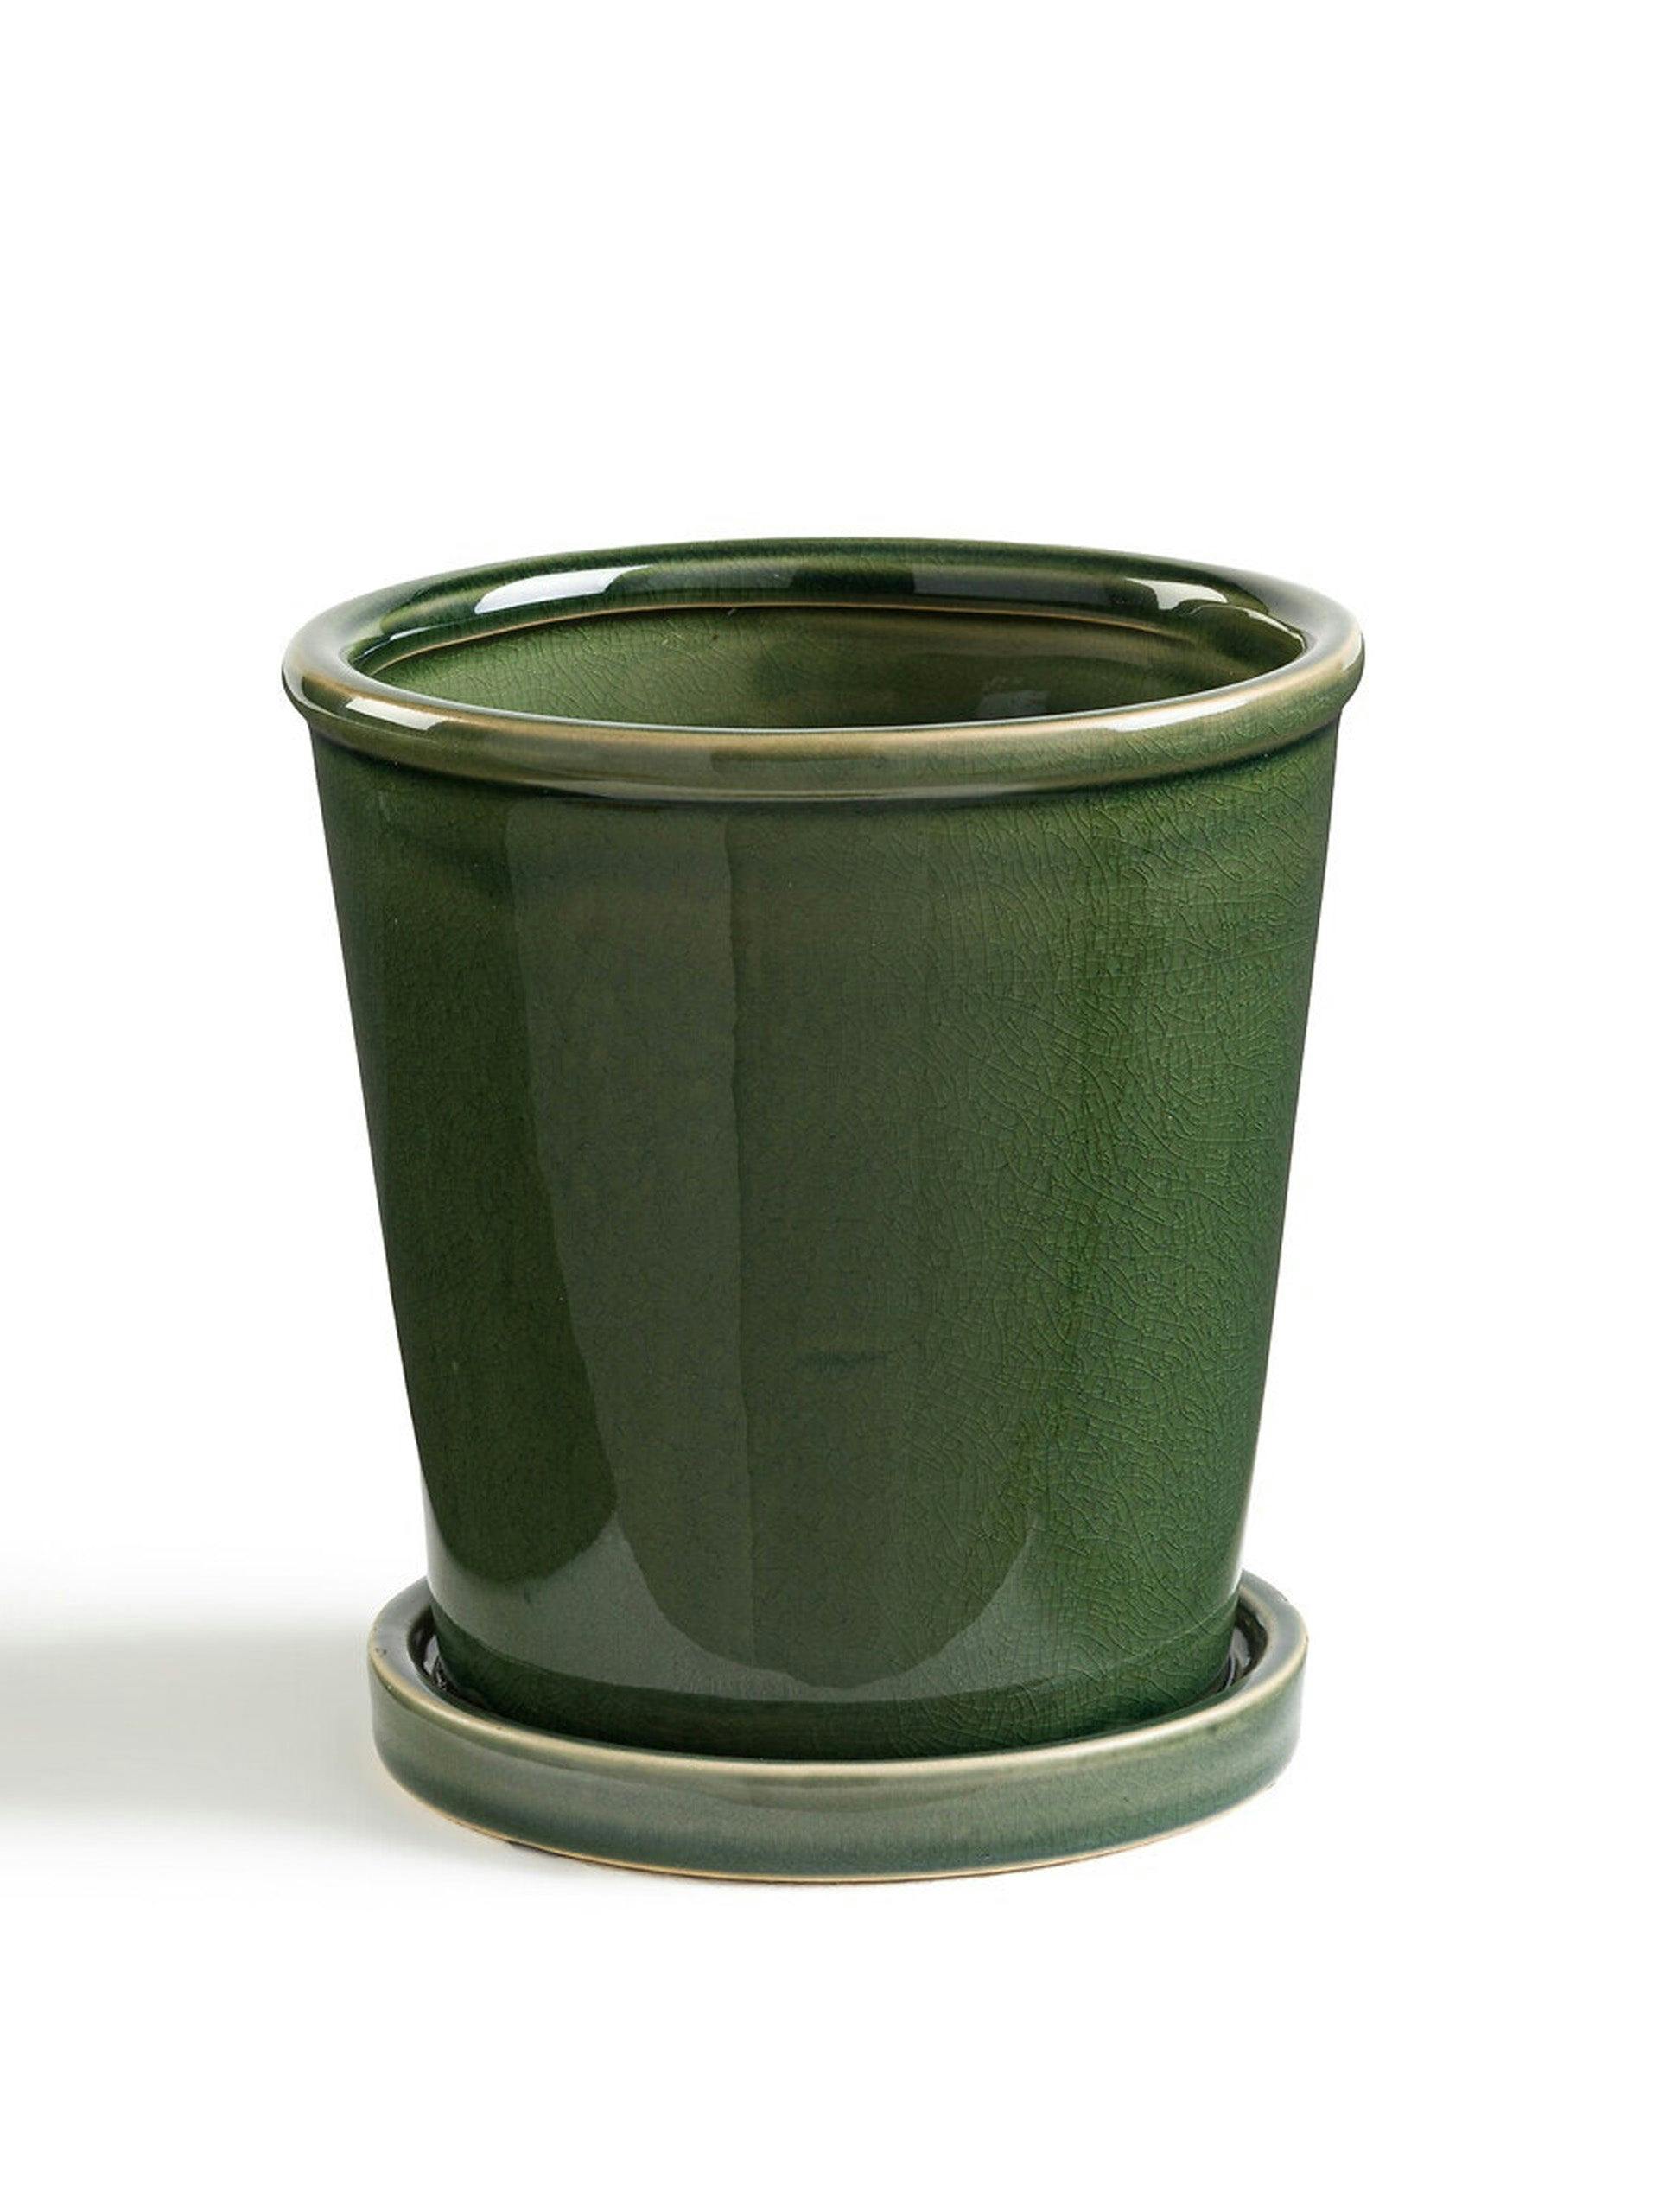 Ceramic flowerpot with base